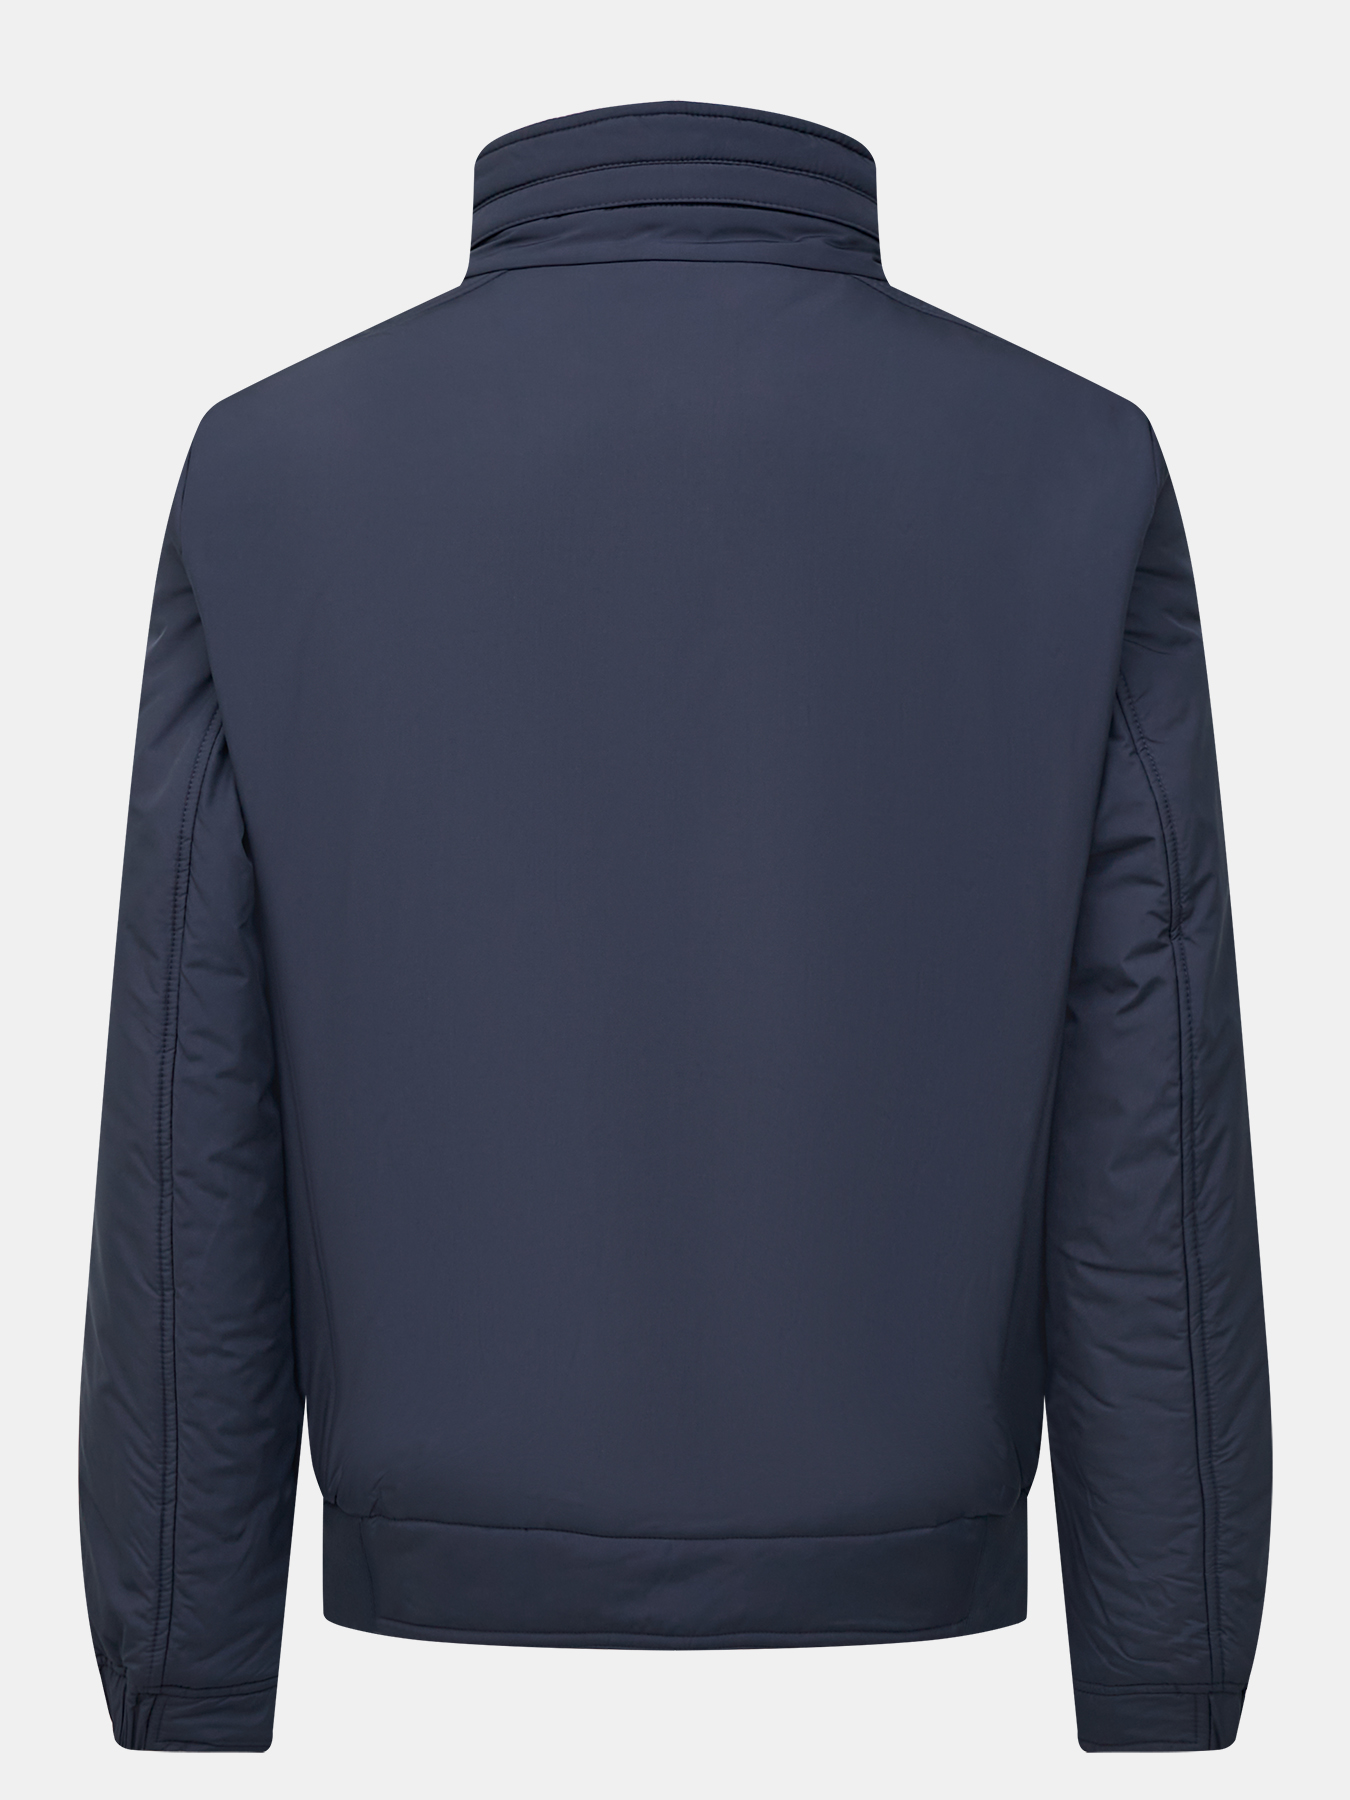 Куртка Ritter 367555-024, цвет синий, размер 46 - фото 5